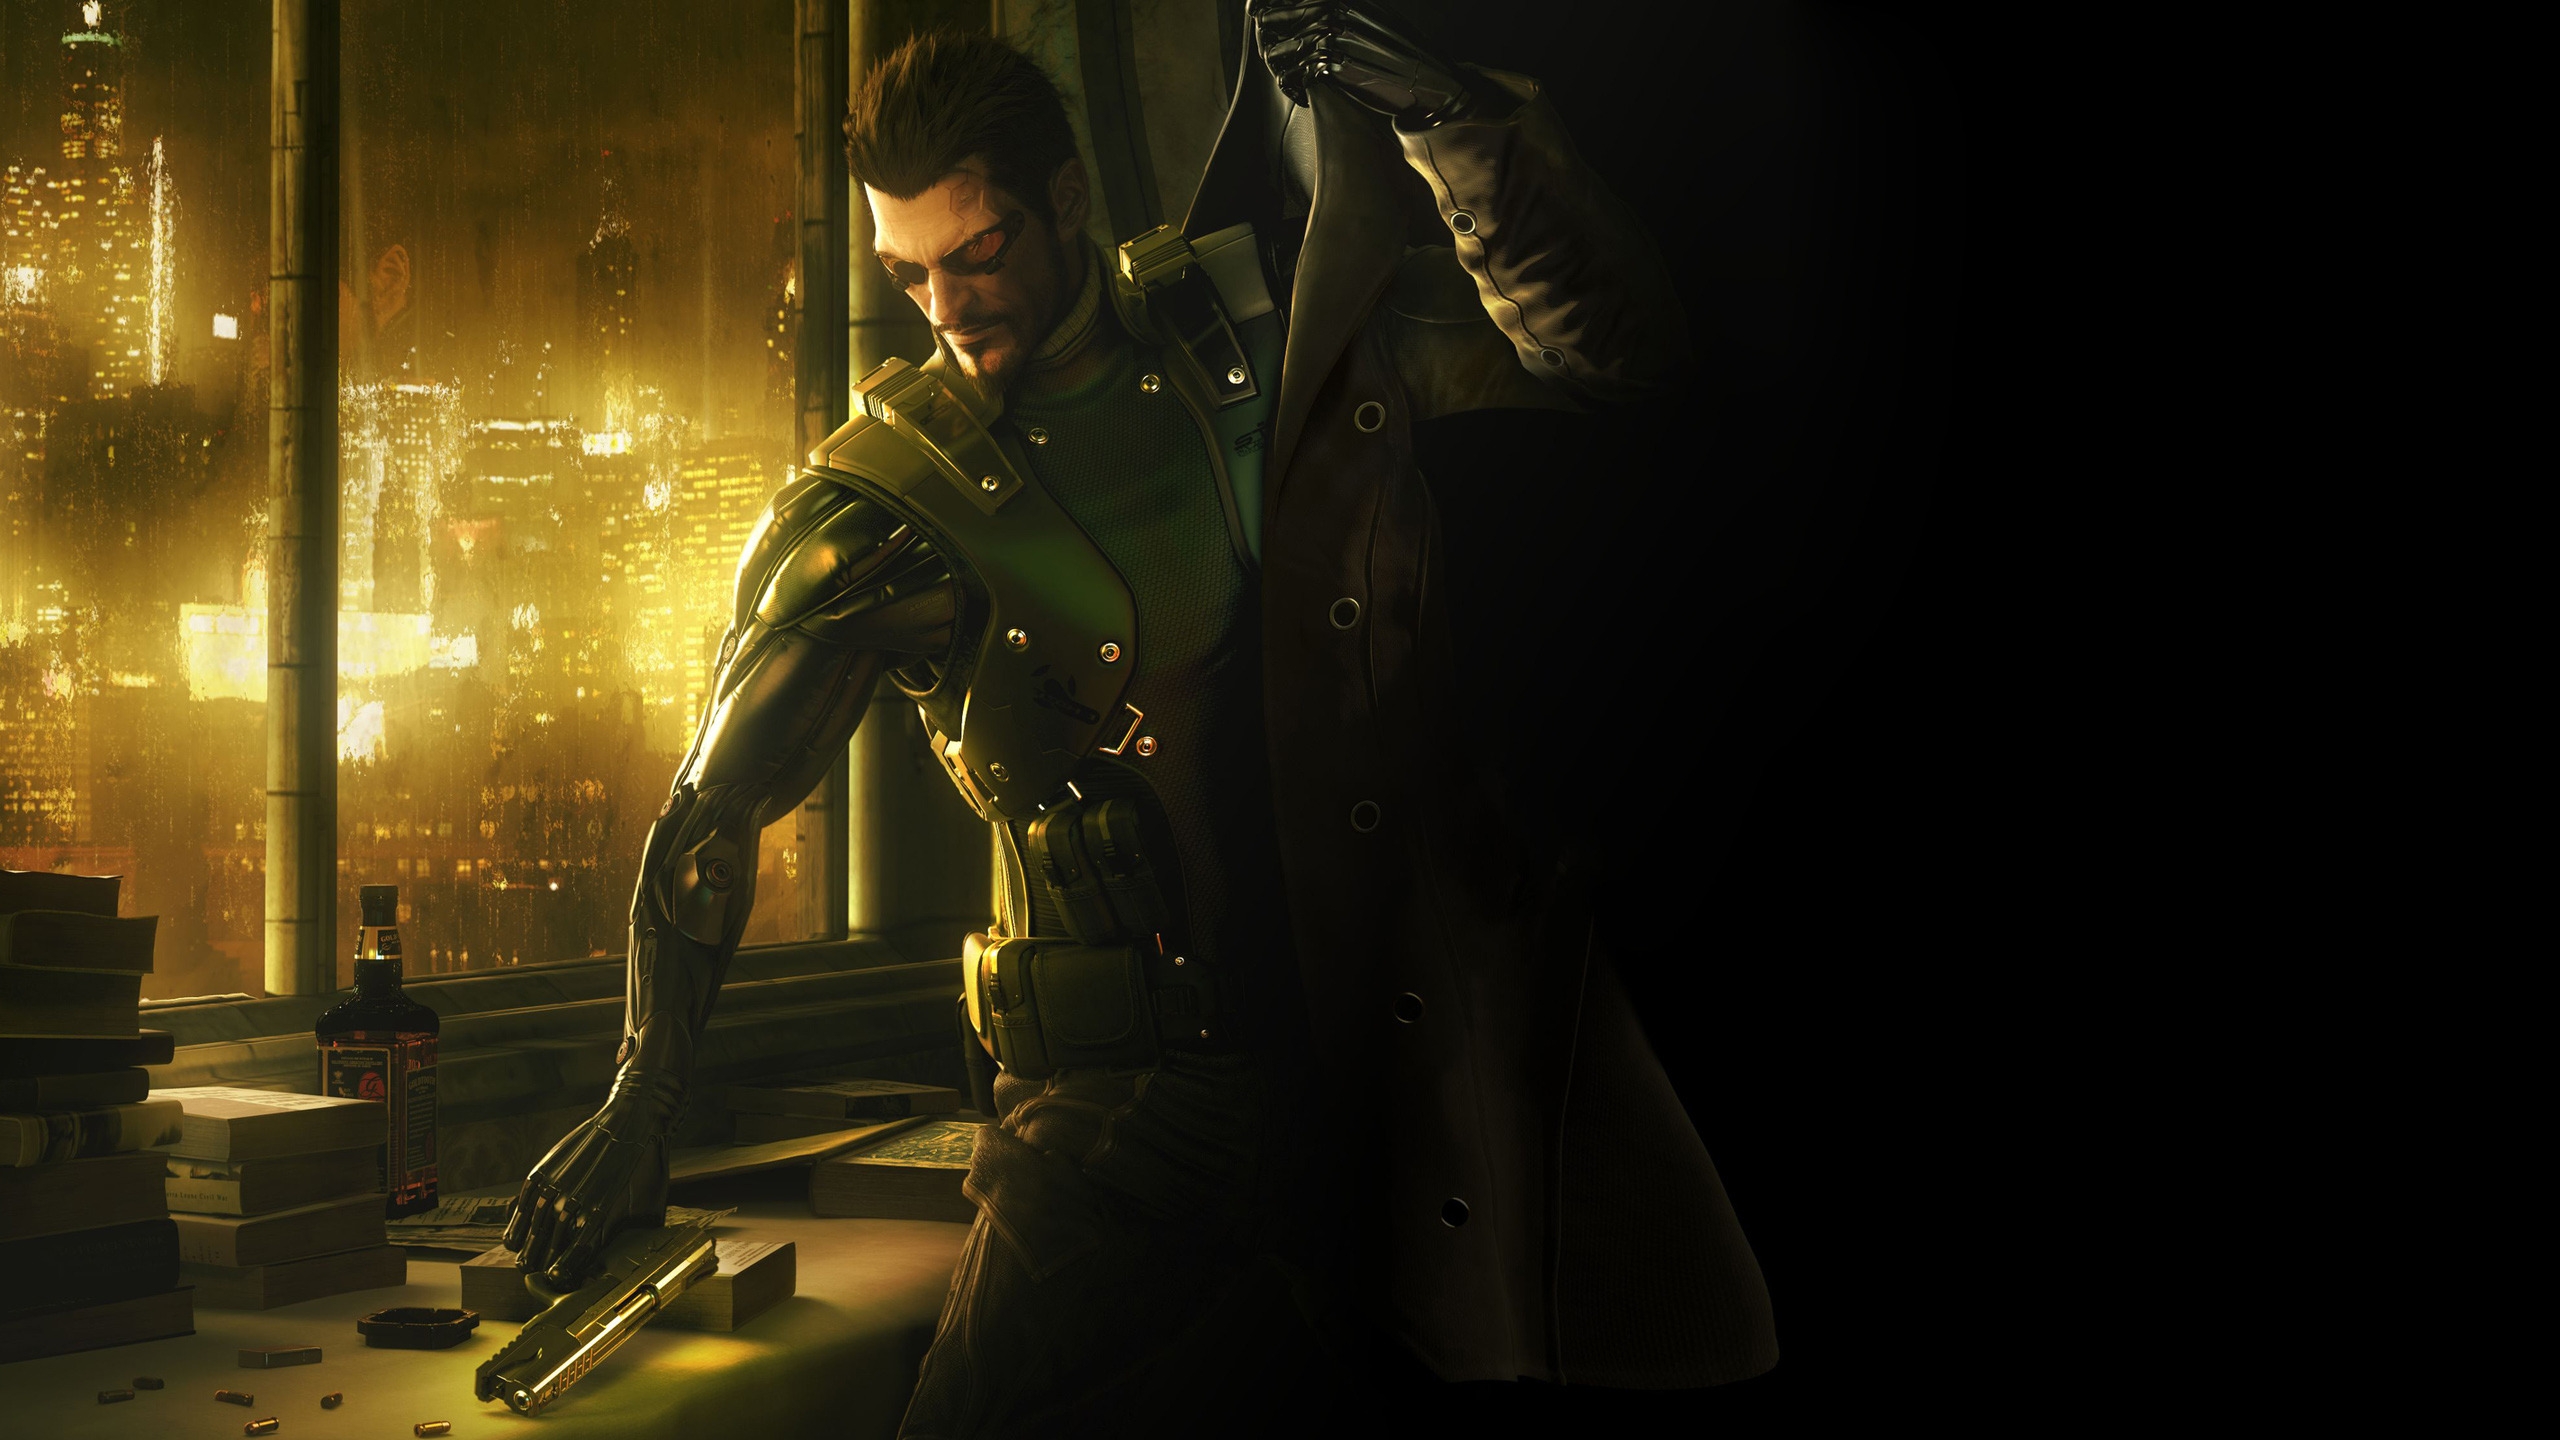 Deus Ex Human Revolution for 2560x1440 HDTV resolution